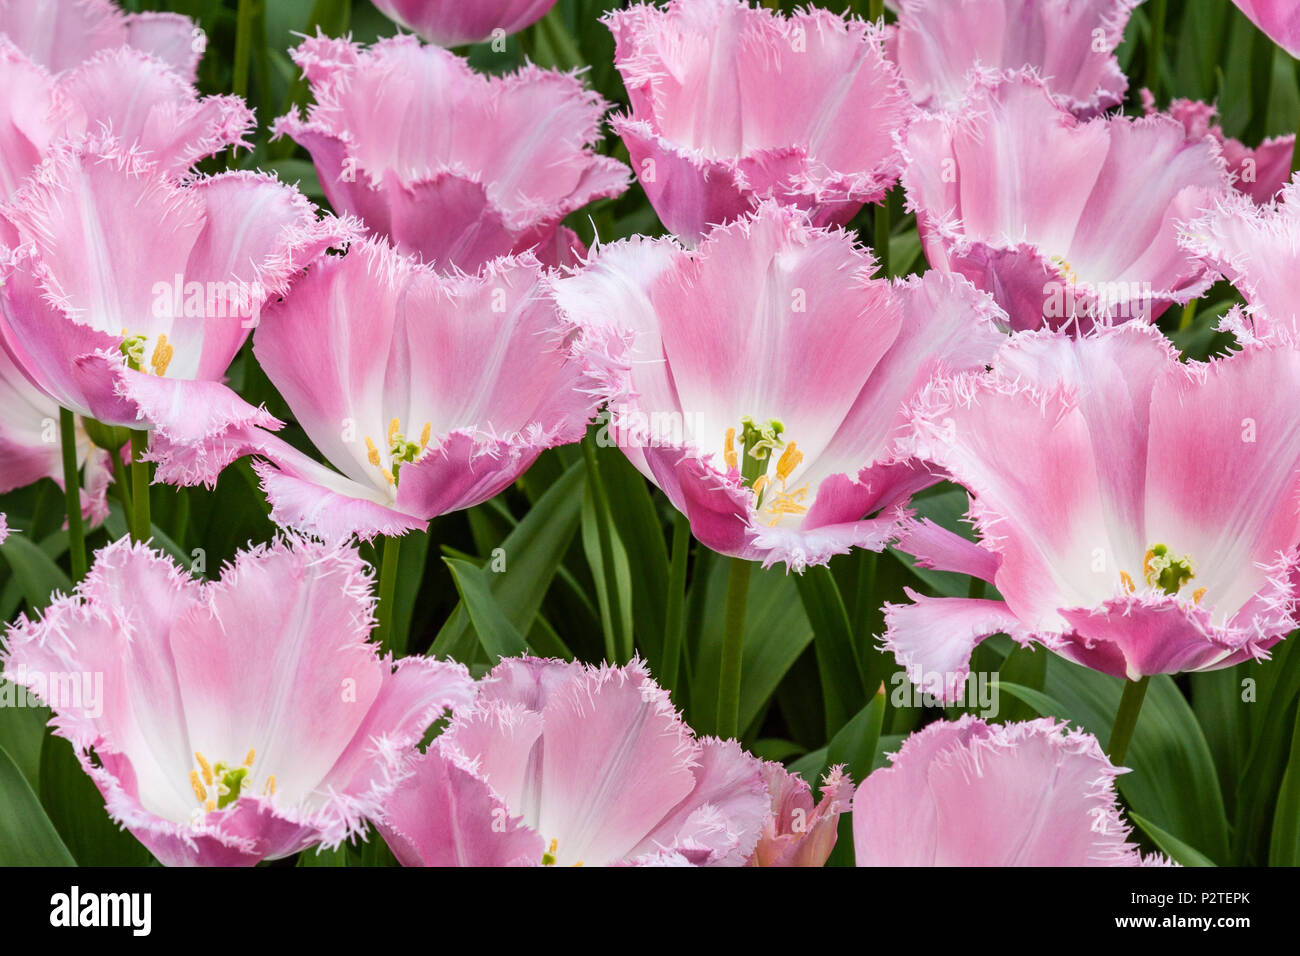 Fringed Tulip Tulipa Fancy Frills At The Keukenhof Gardens In South Holland The Netherlands Stock Photo Alamy